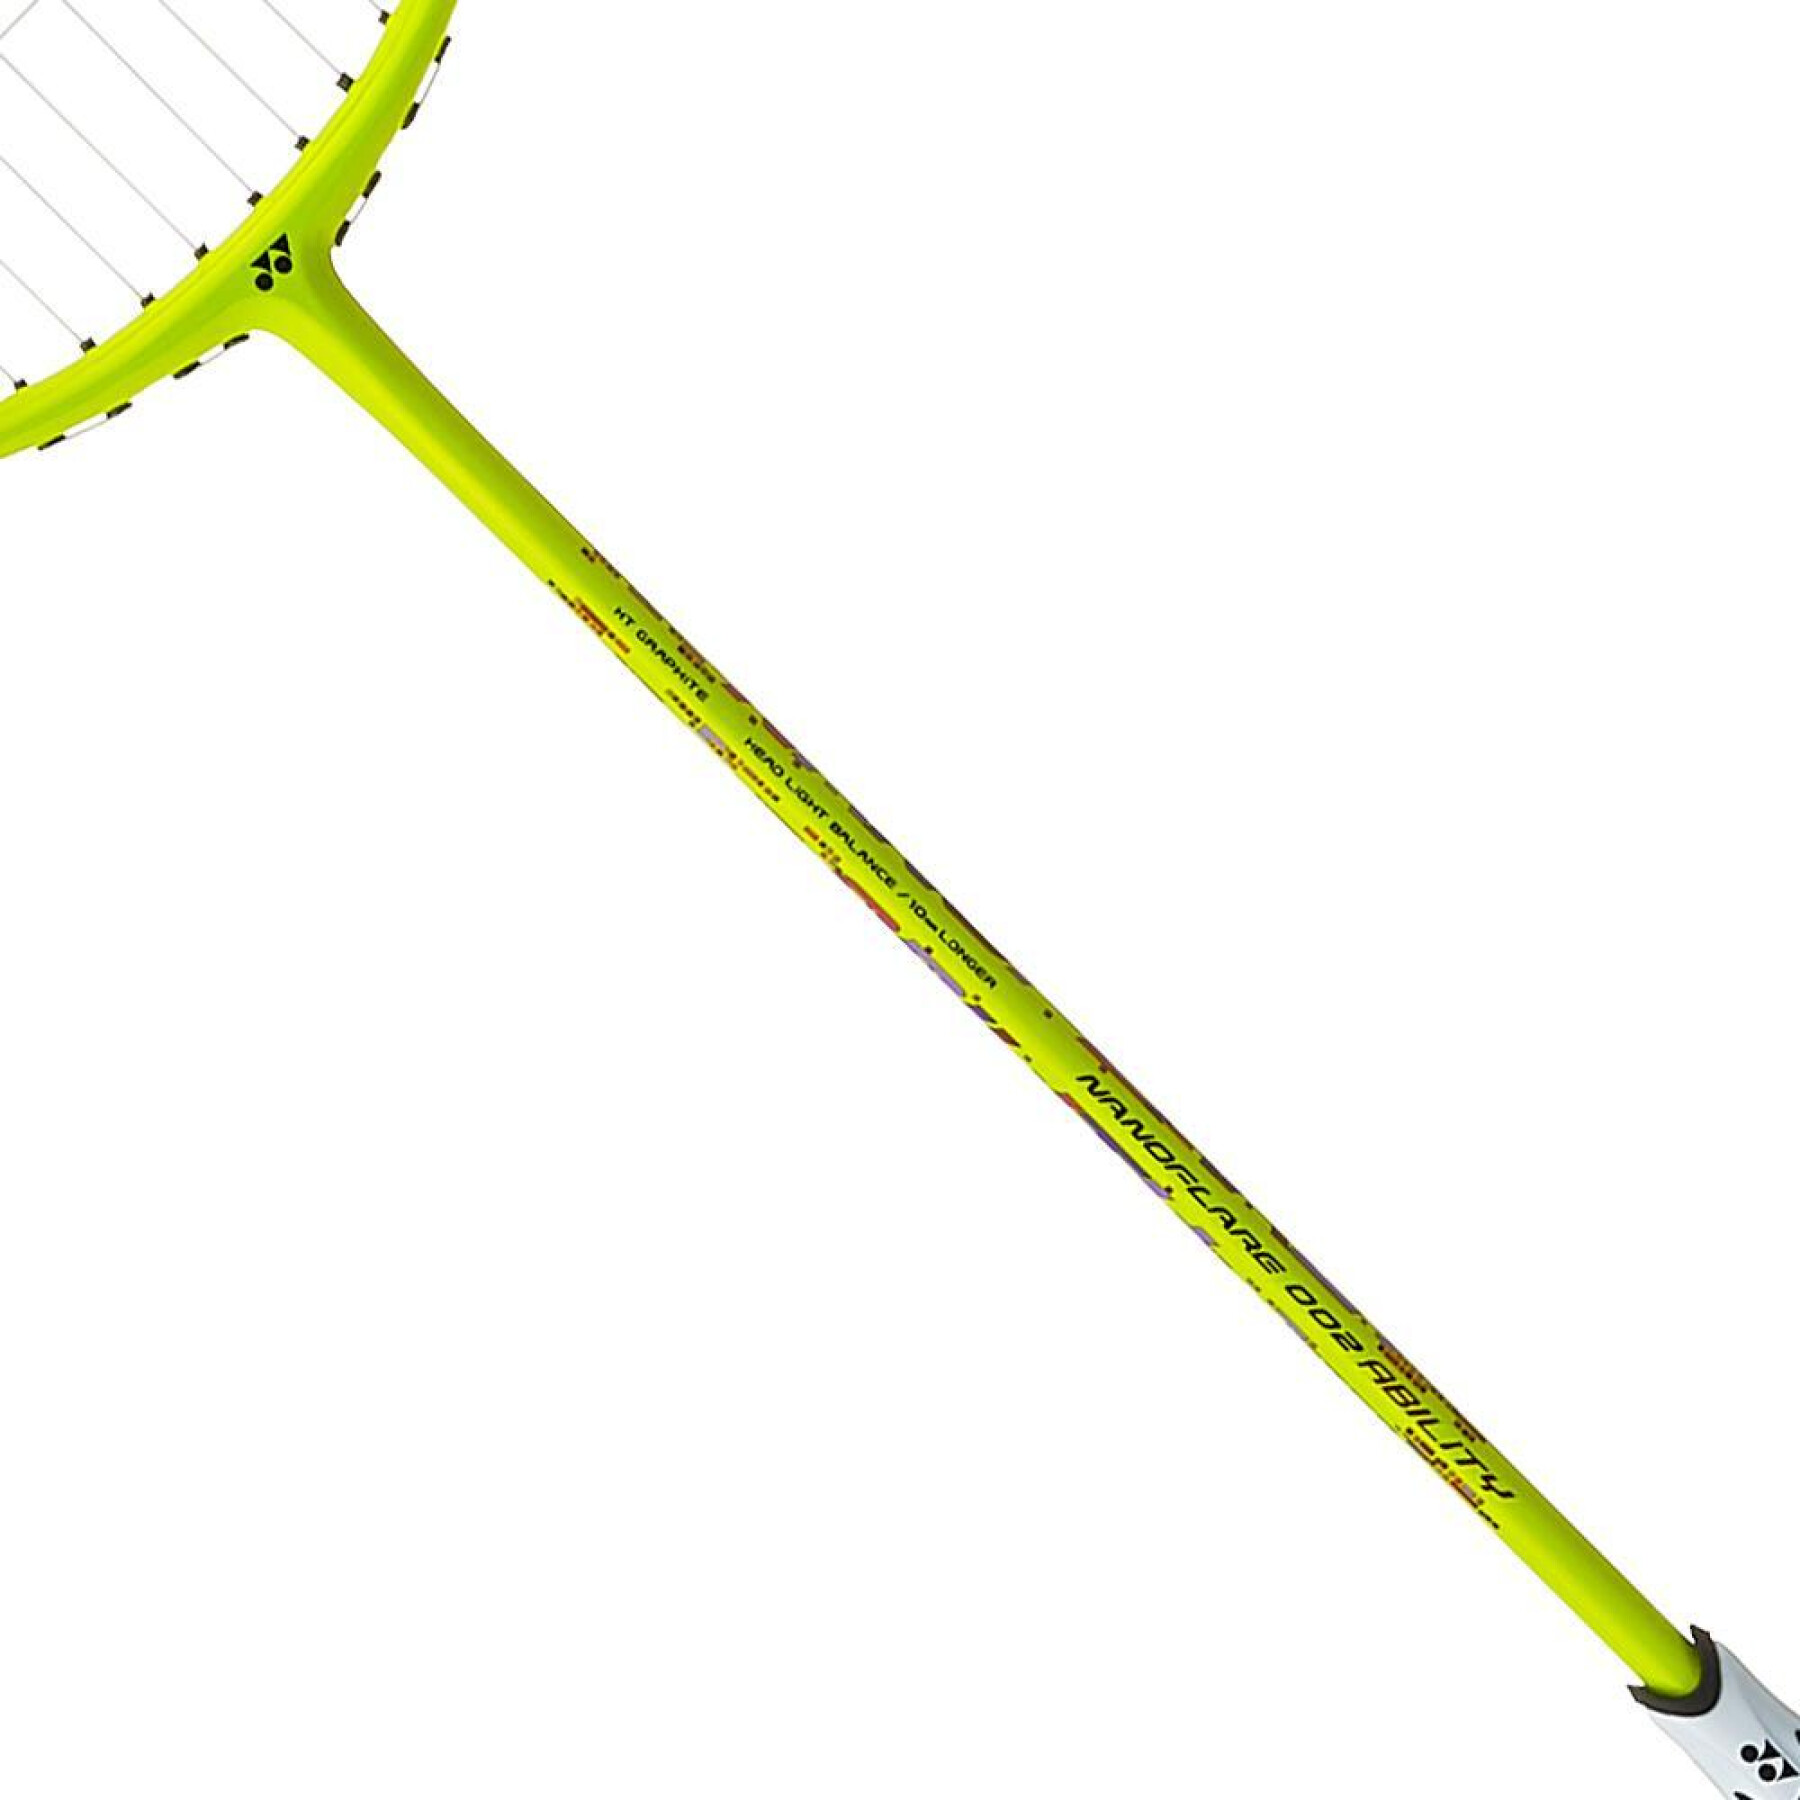 Badmintonschläger Yonex Nanoflare 002 Ability 4U4